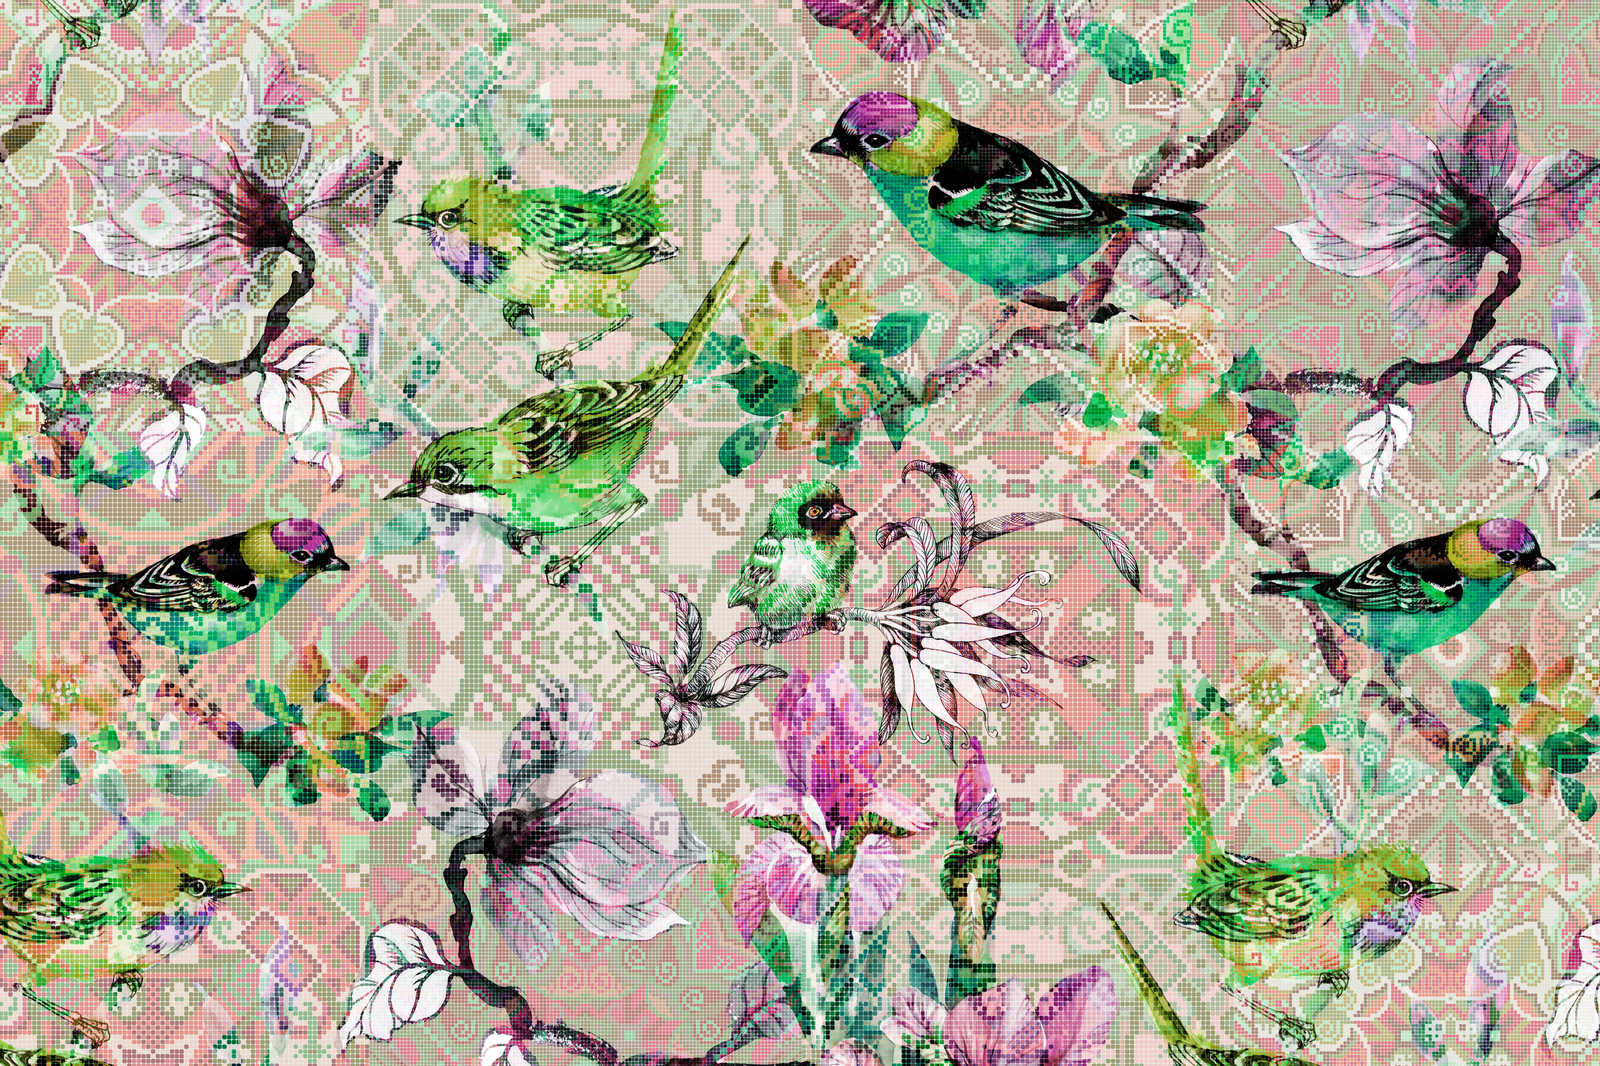             Vogel Leinwandbild mit Mosaik Muster | mosaic birds 2 – 0,90 m x 0,60 m
        